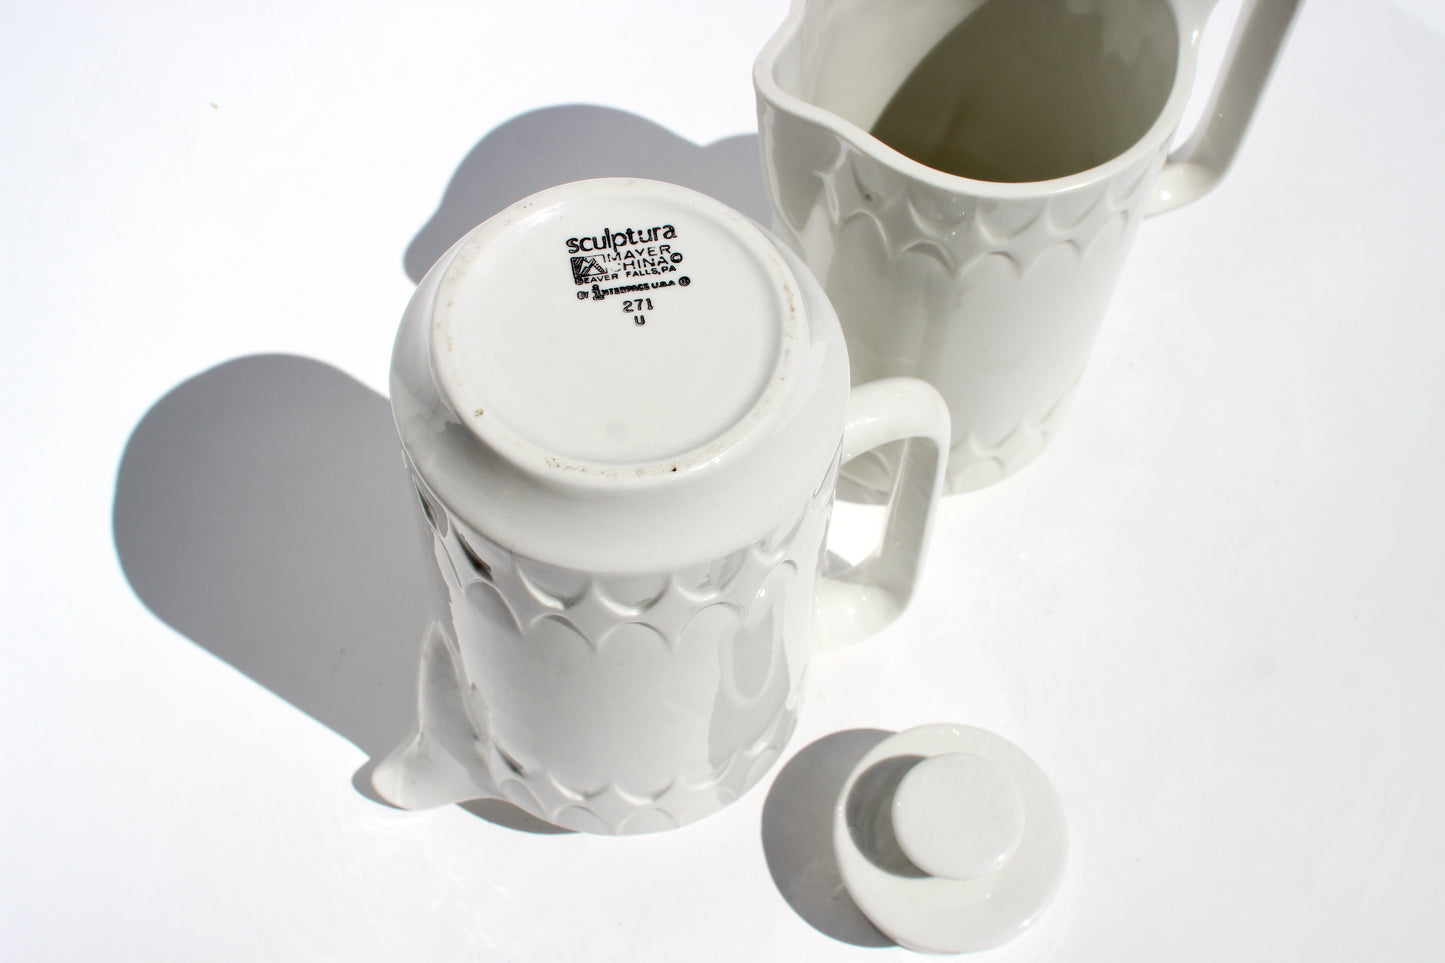 geo coffee carafe + water pitcher